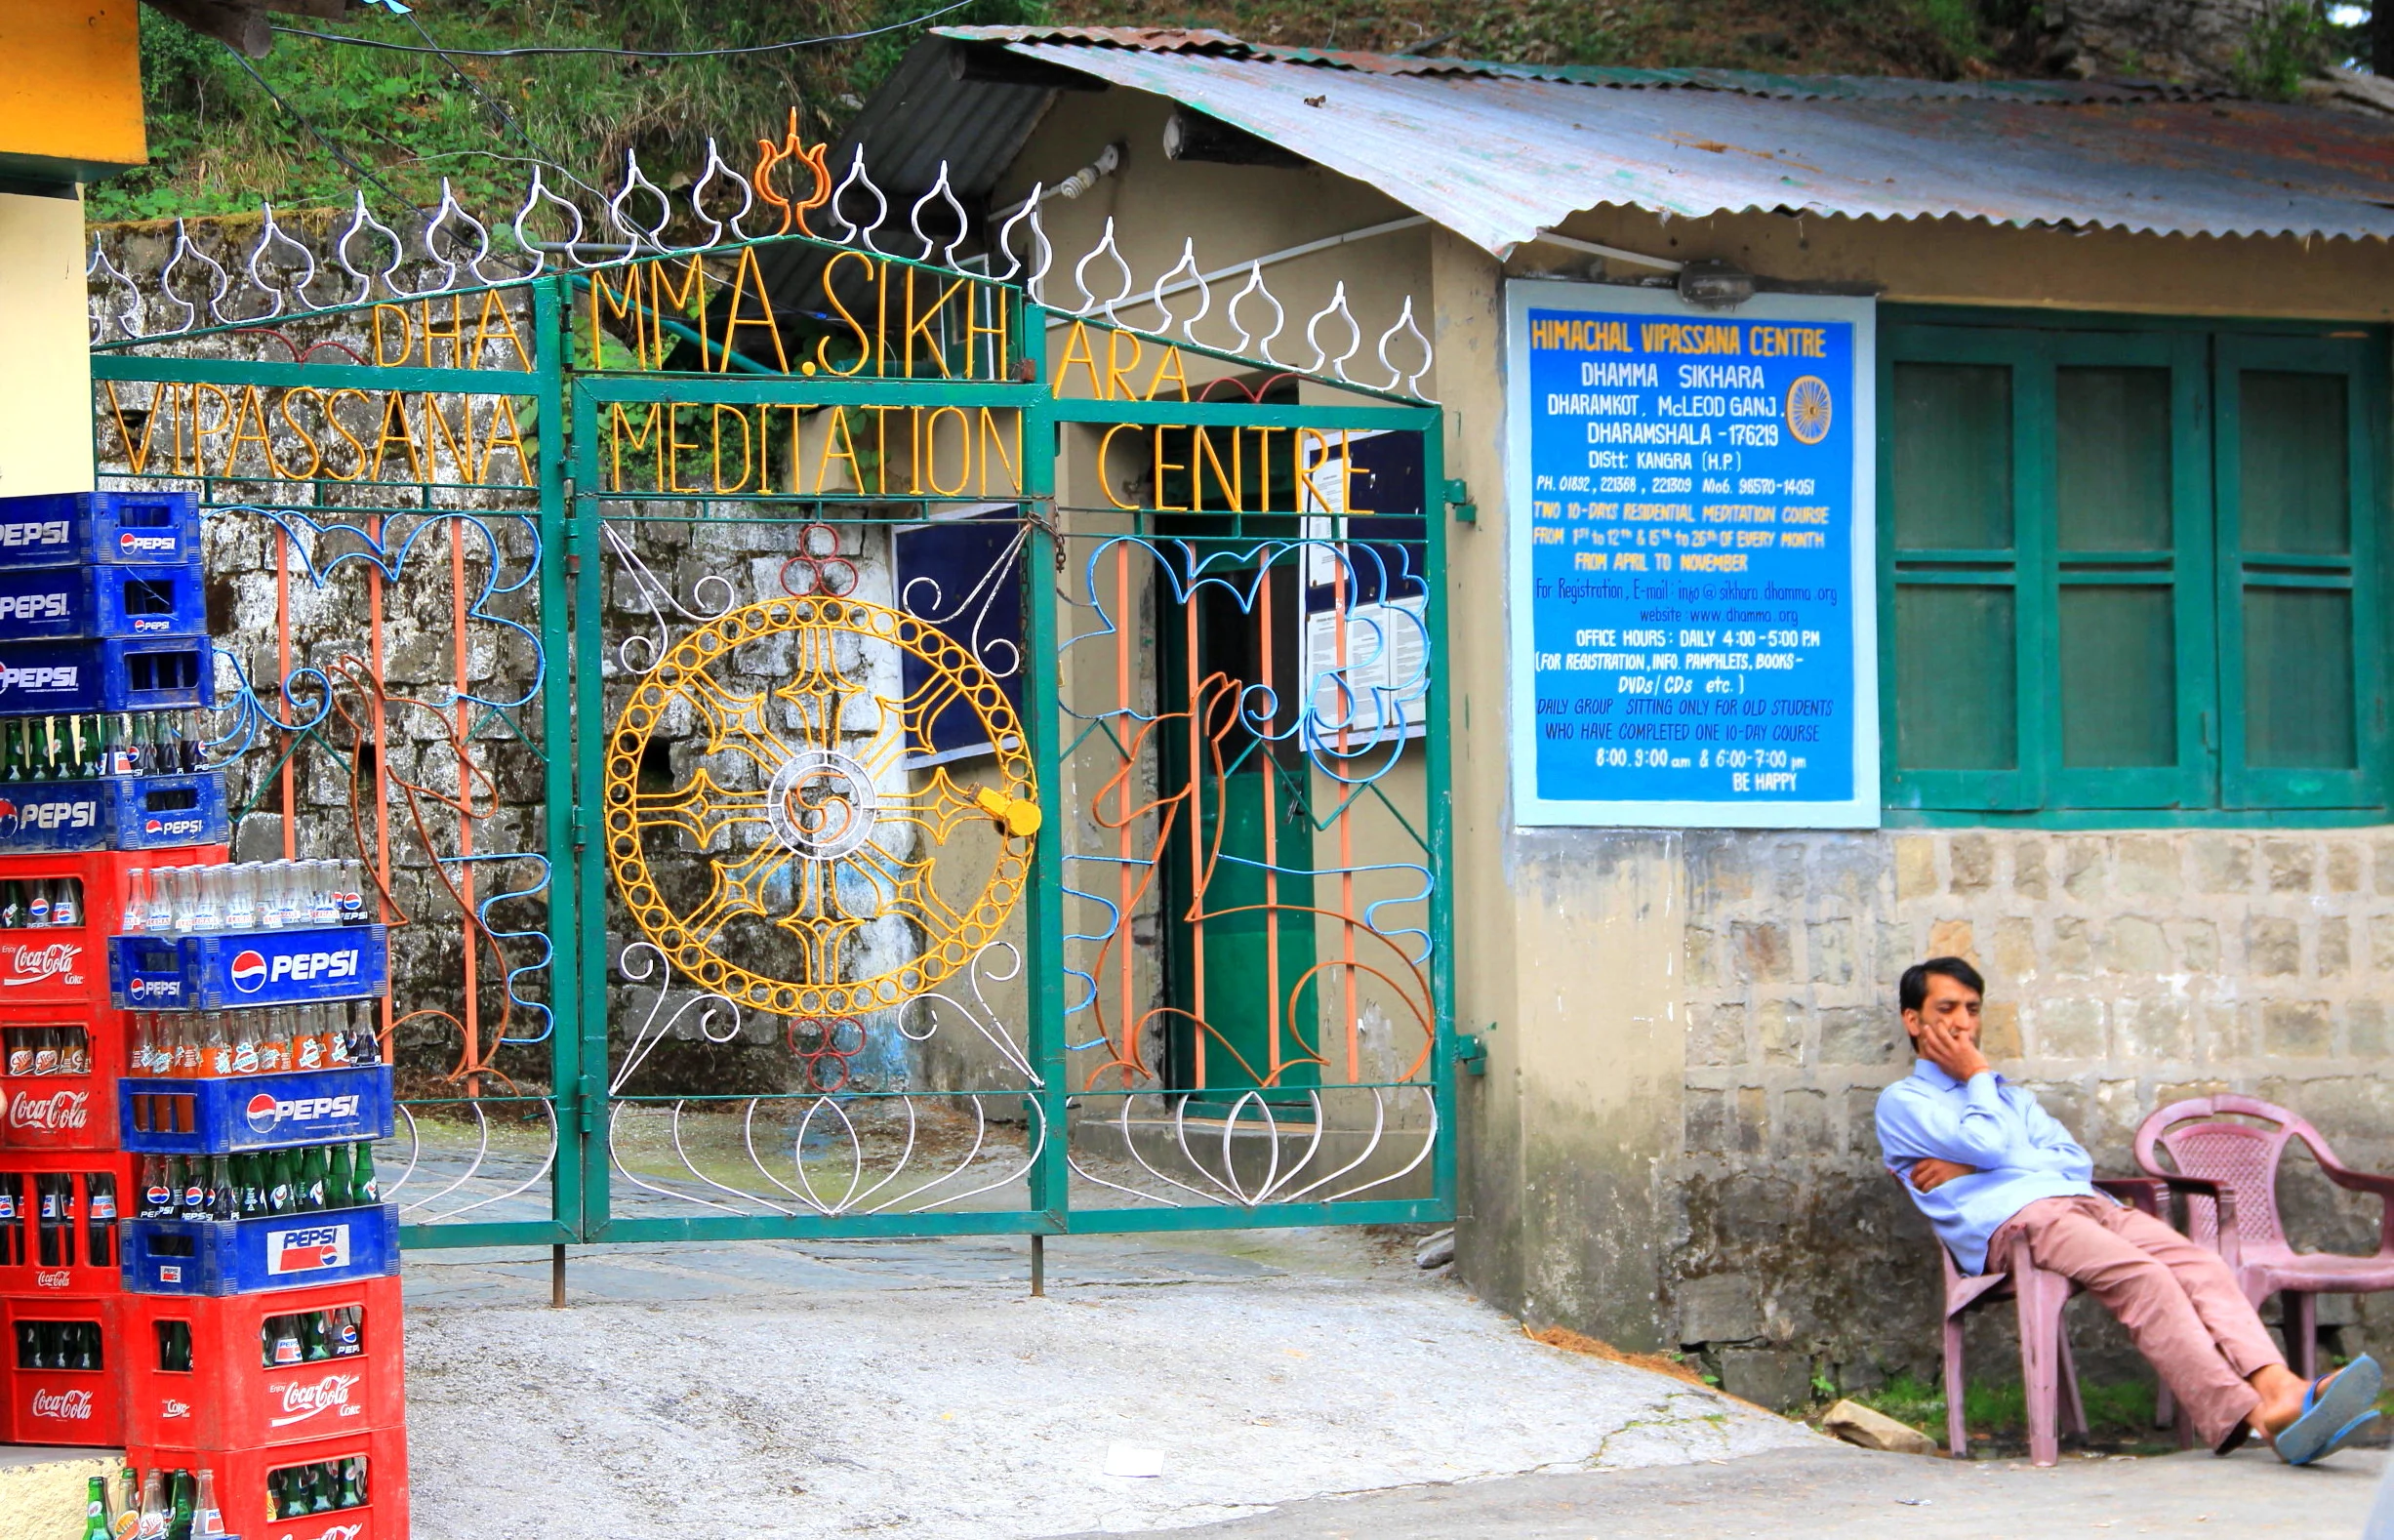 Vipassana meditation centre in Dharamkot, McLeod Ganj, Dharamsala, India